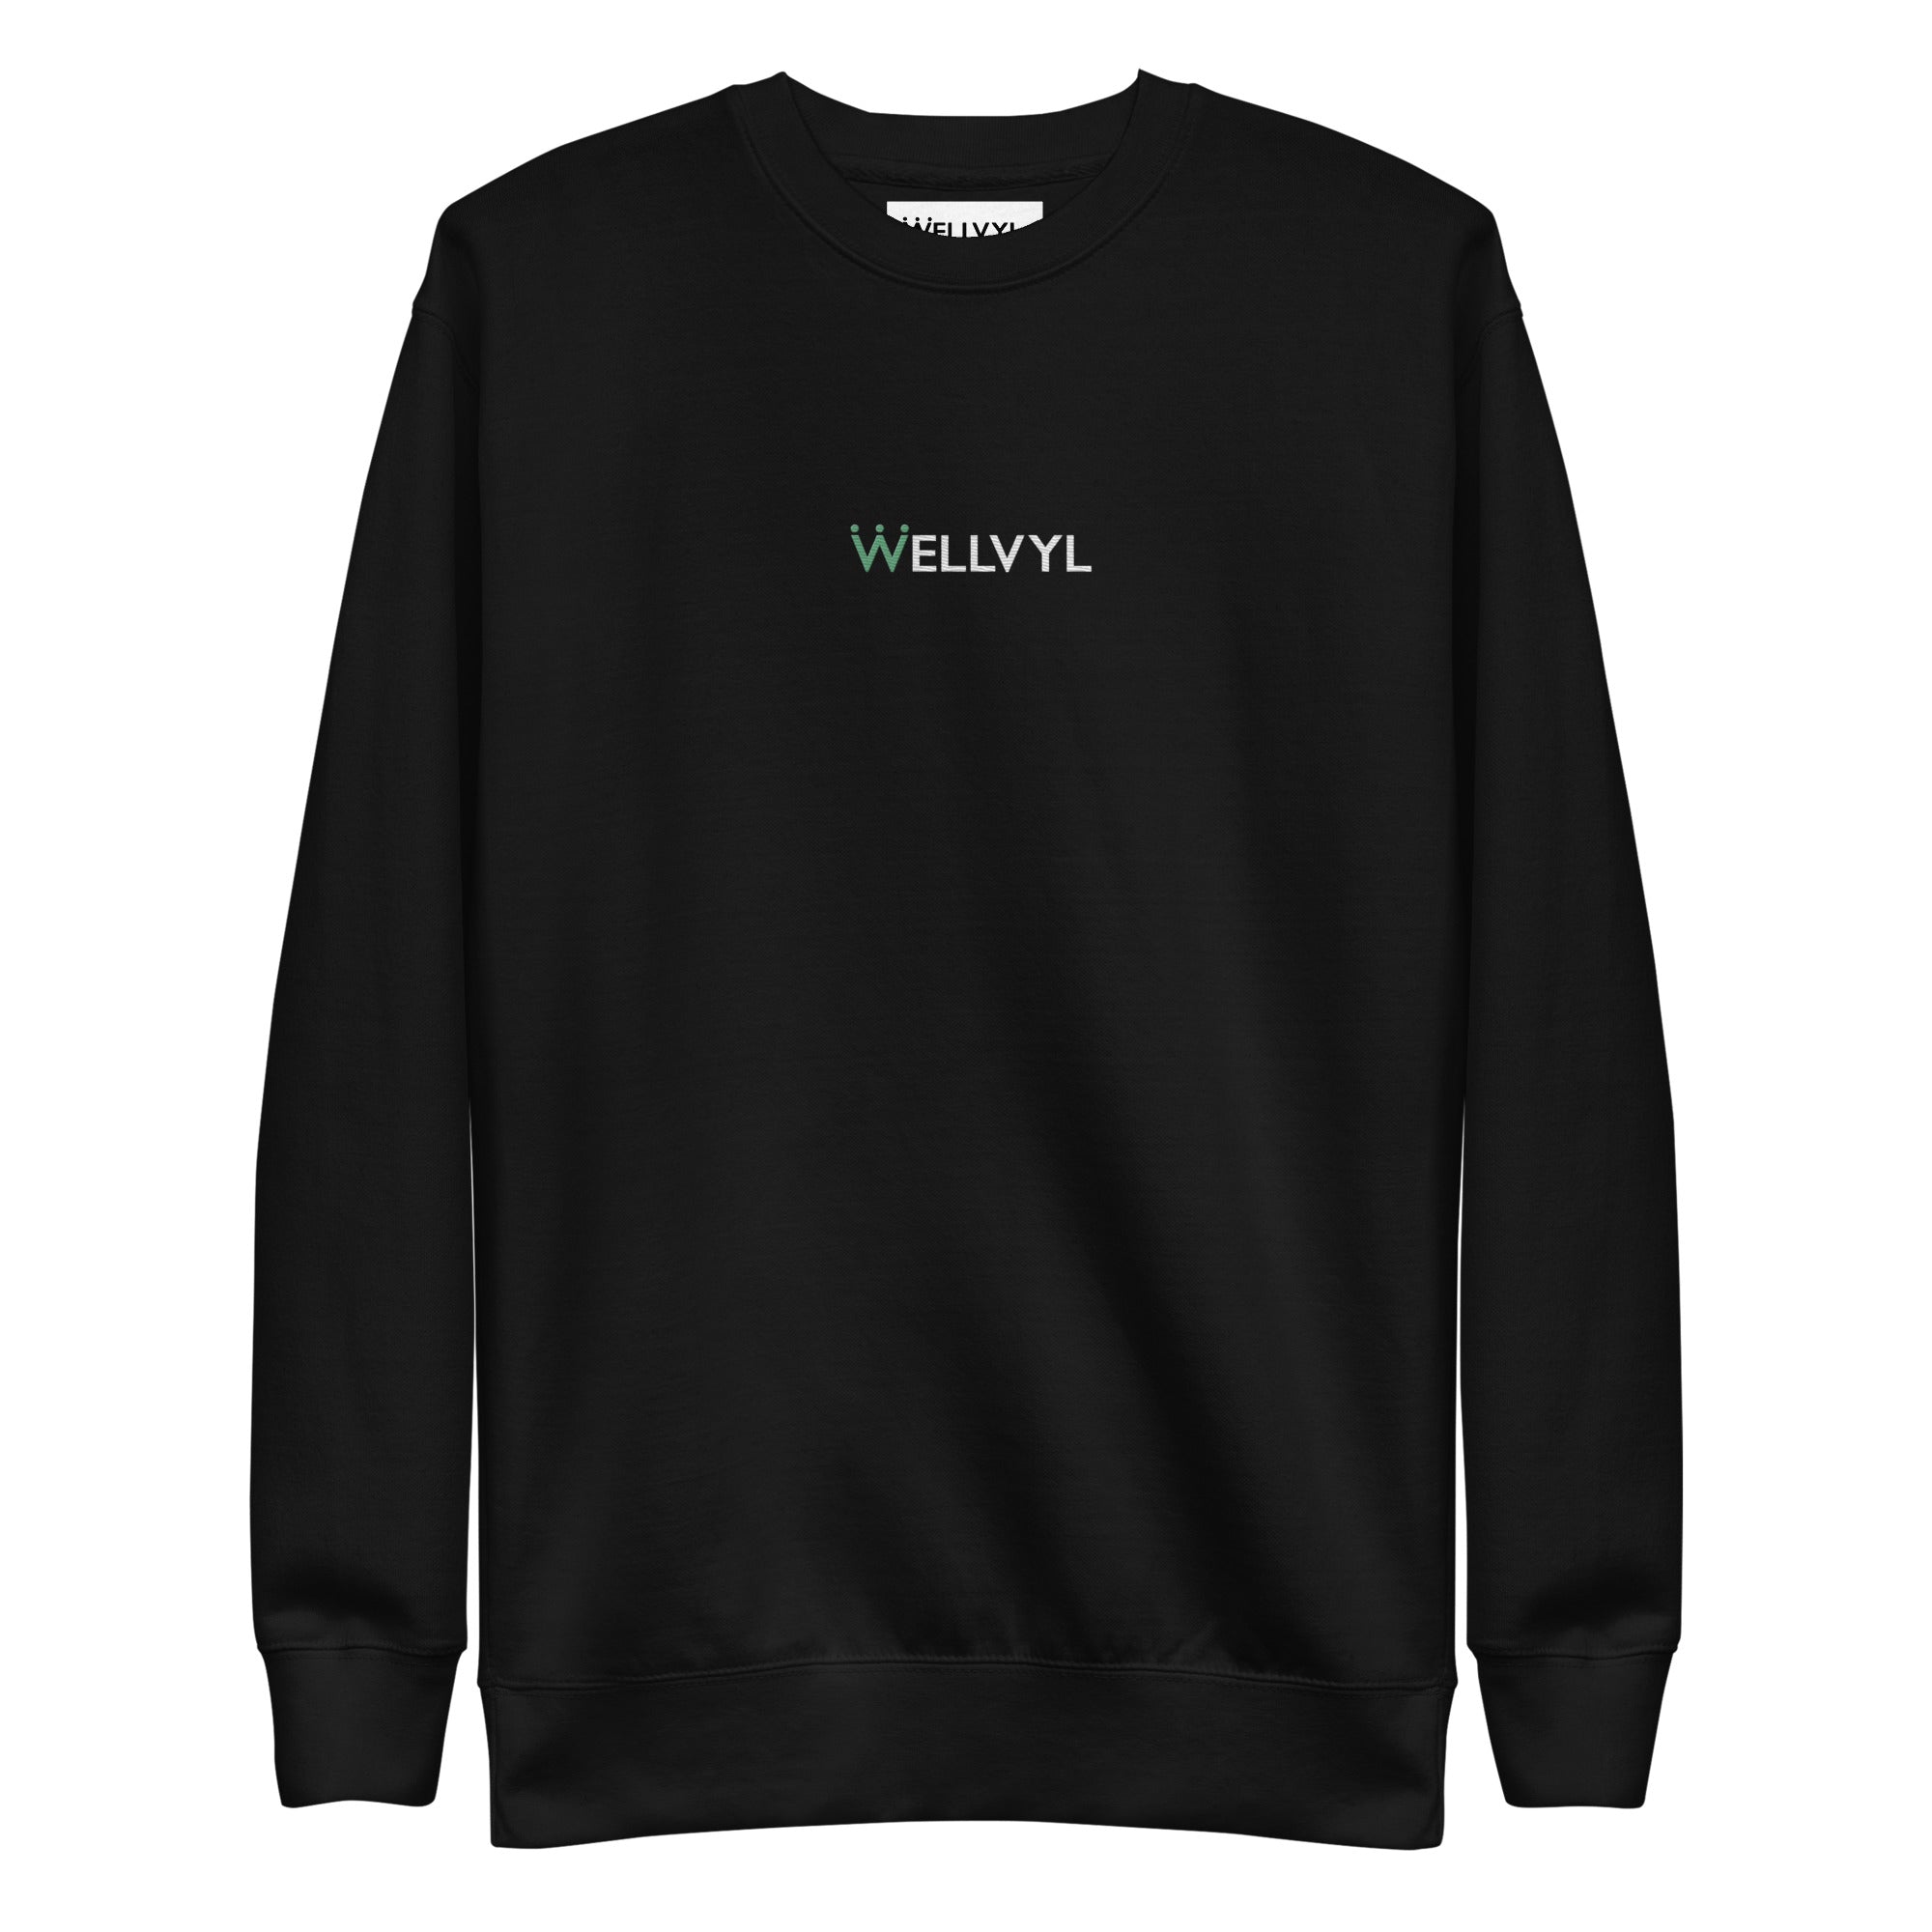 The W Sweatshirt